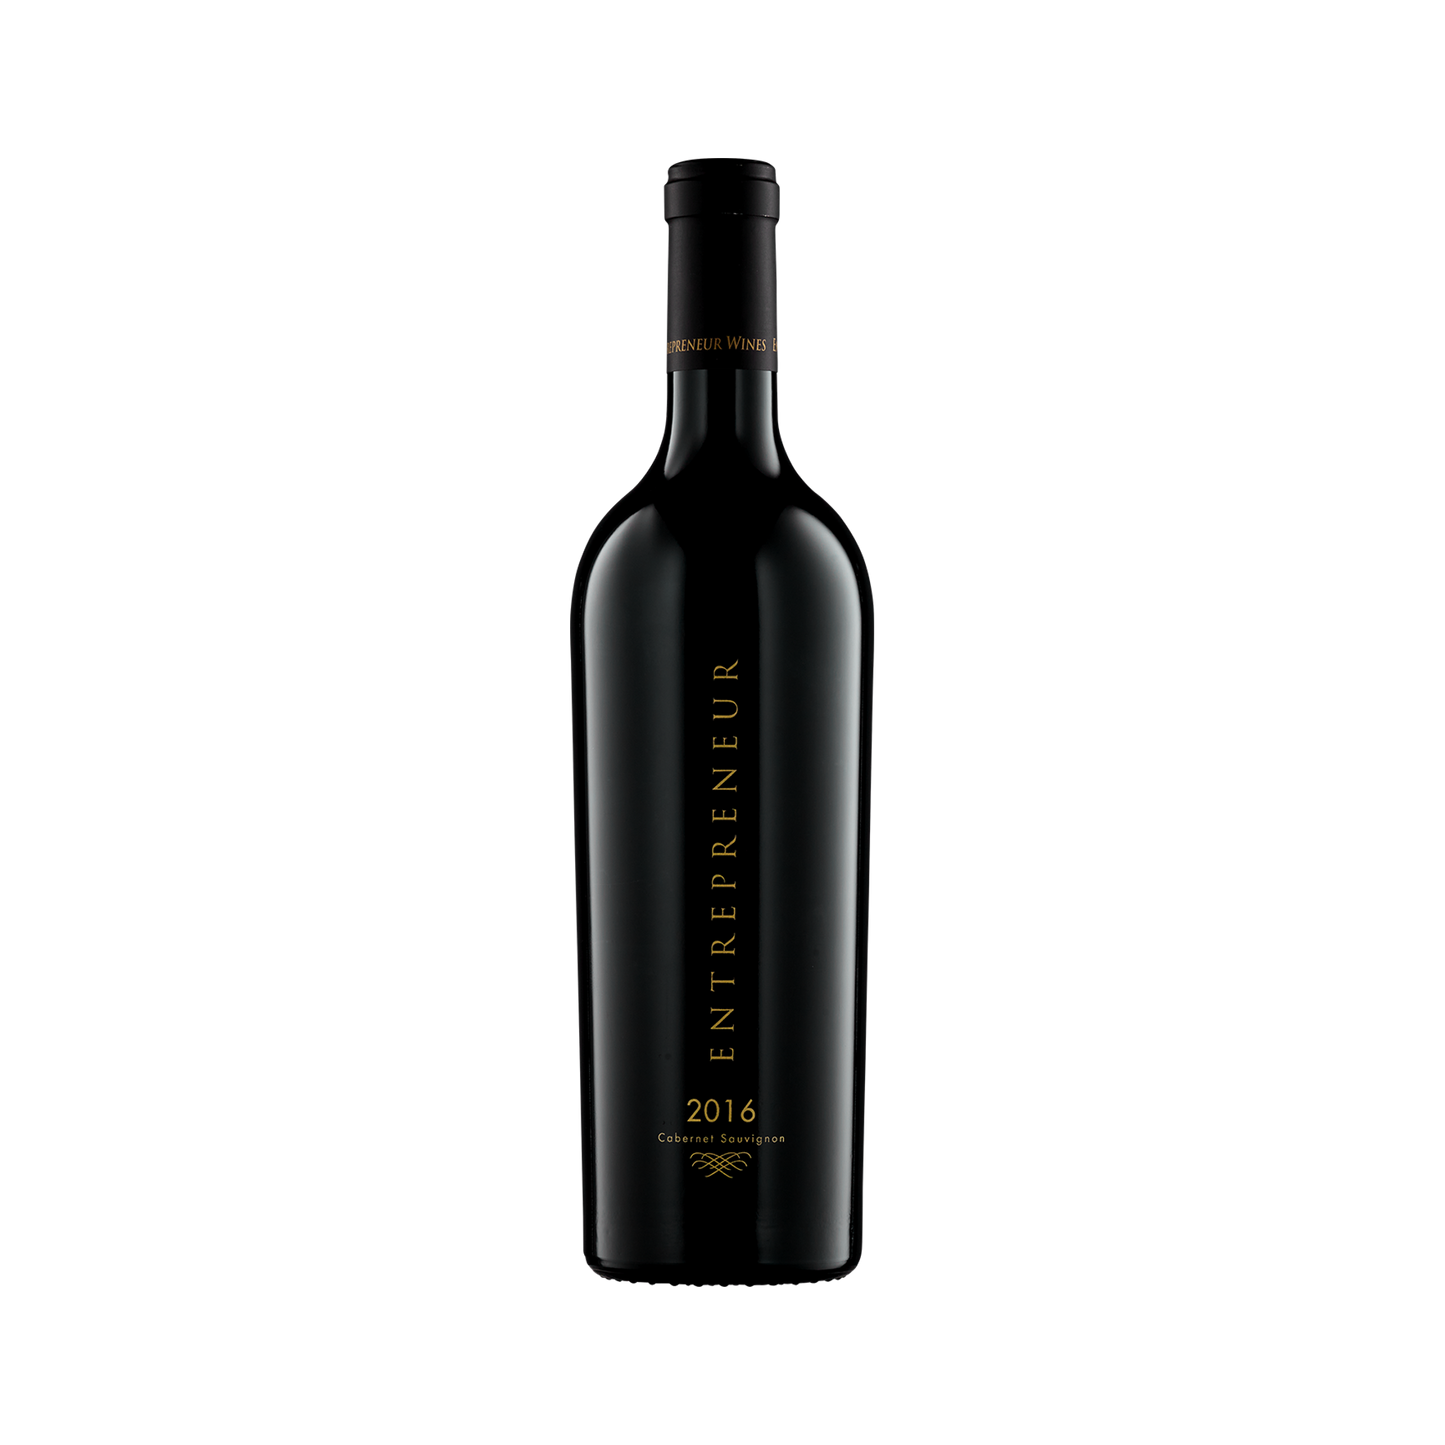 A bottle of Entrepreneur 2016 Cabernet Sauvignon Stagecoach Vineyard